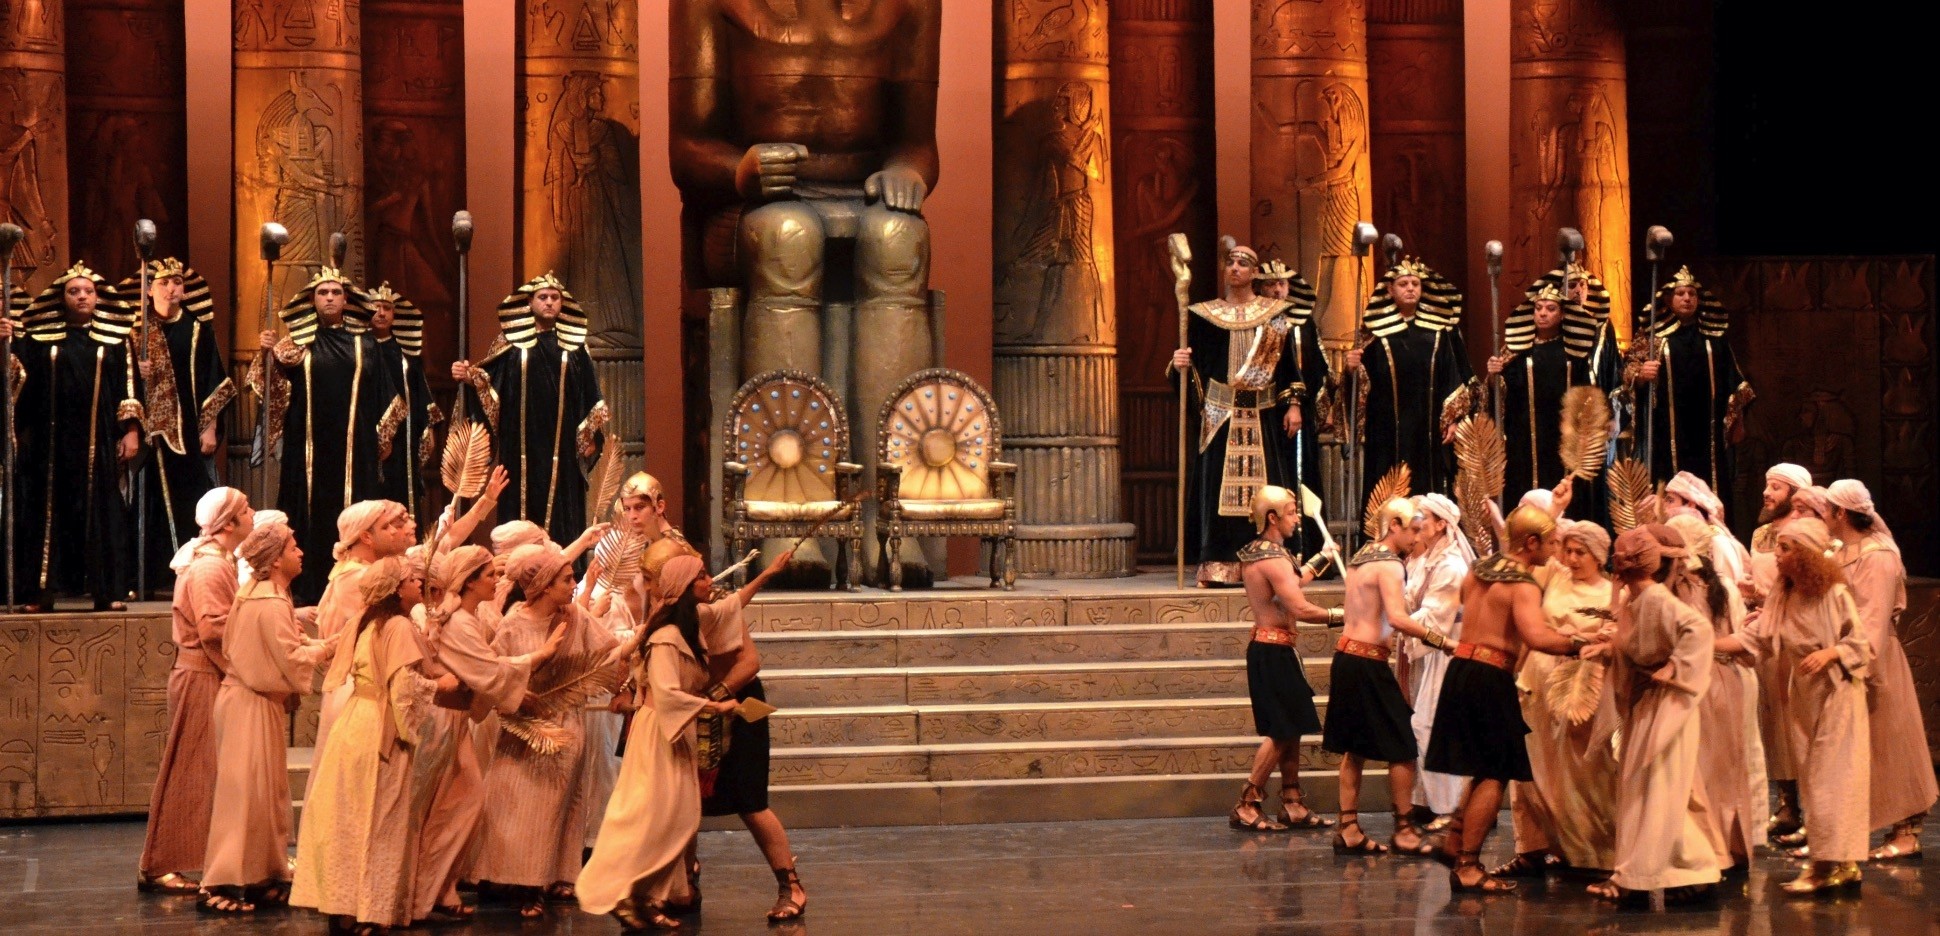 u201cAidau201d opera by Verdi will be presented to art lovers on the night of Feb. 23.